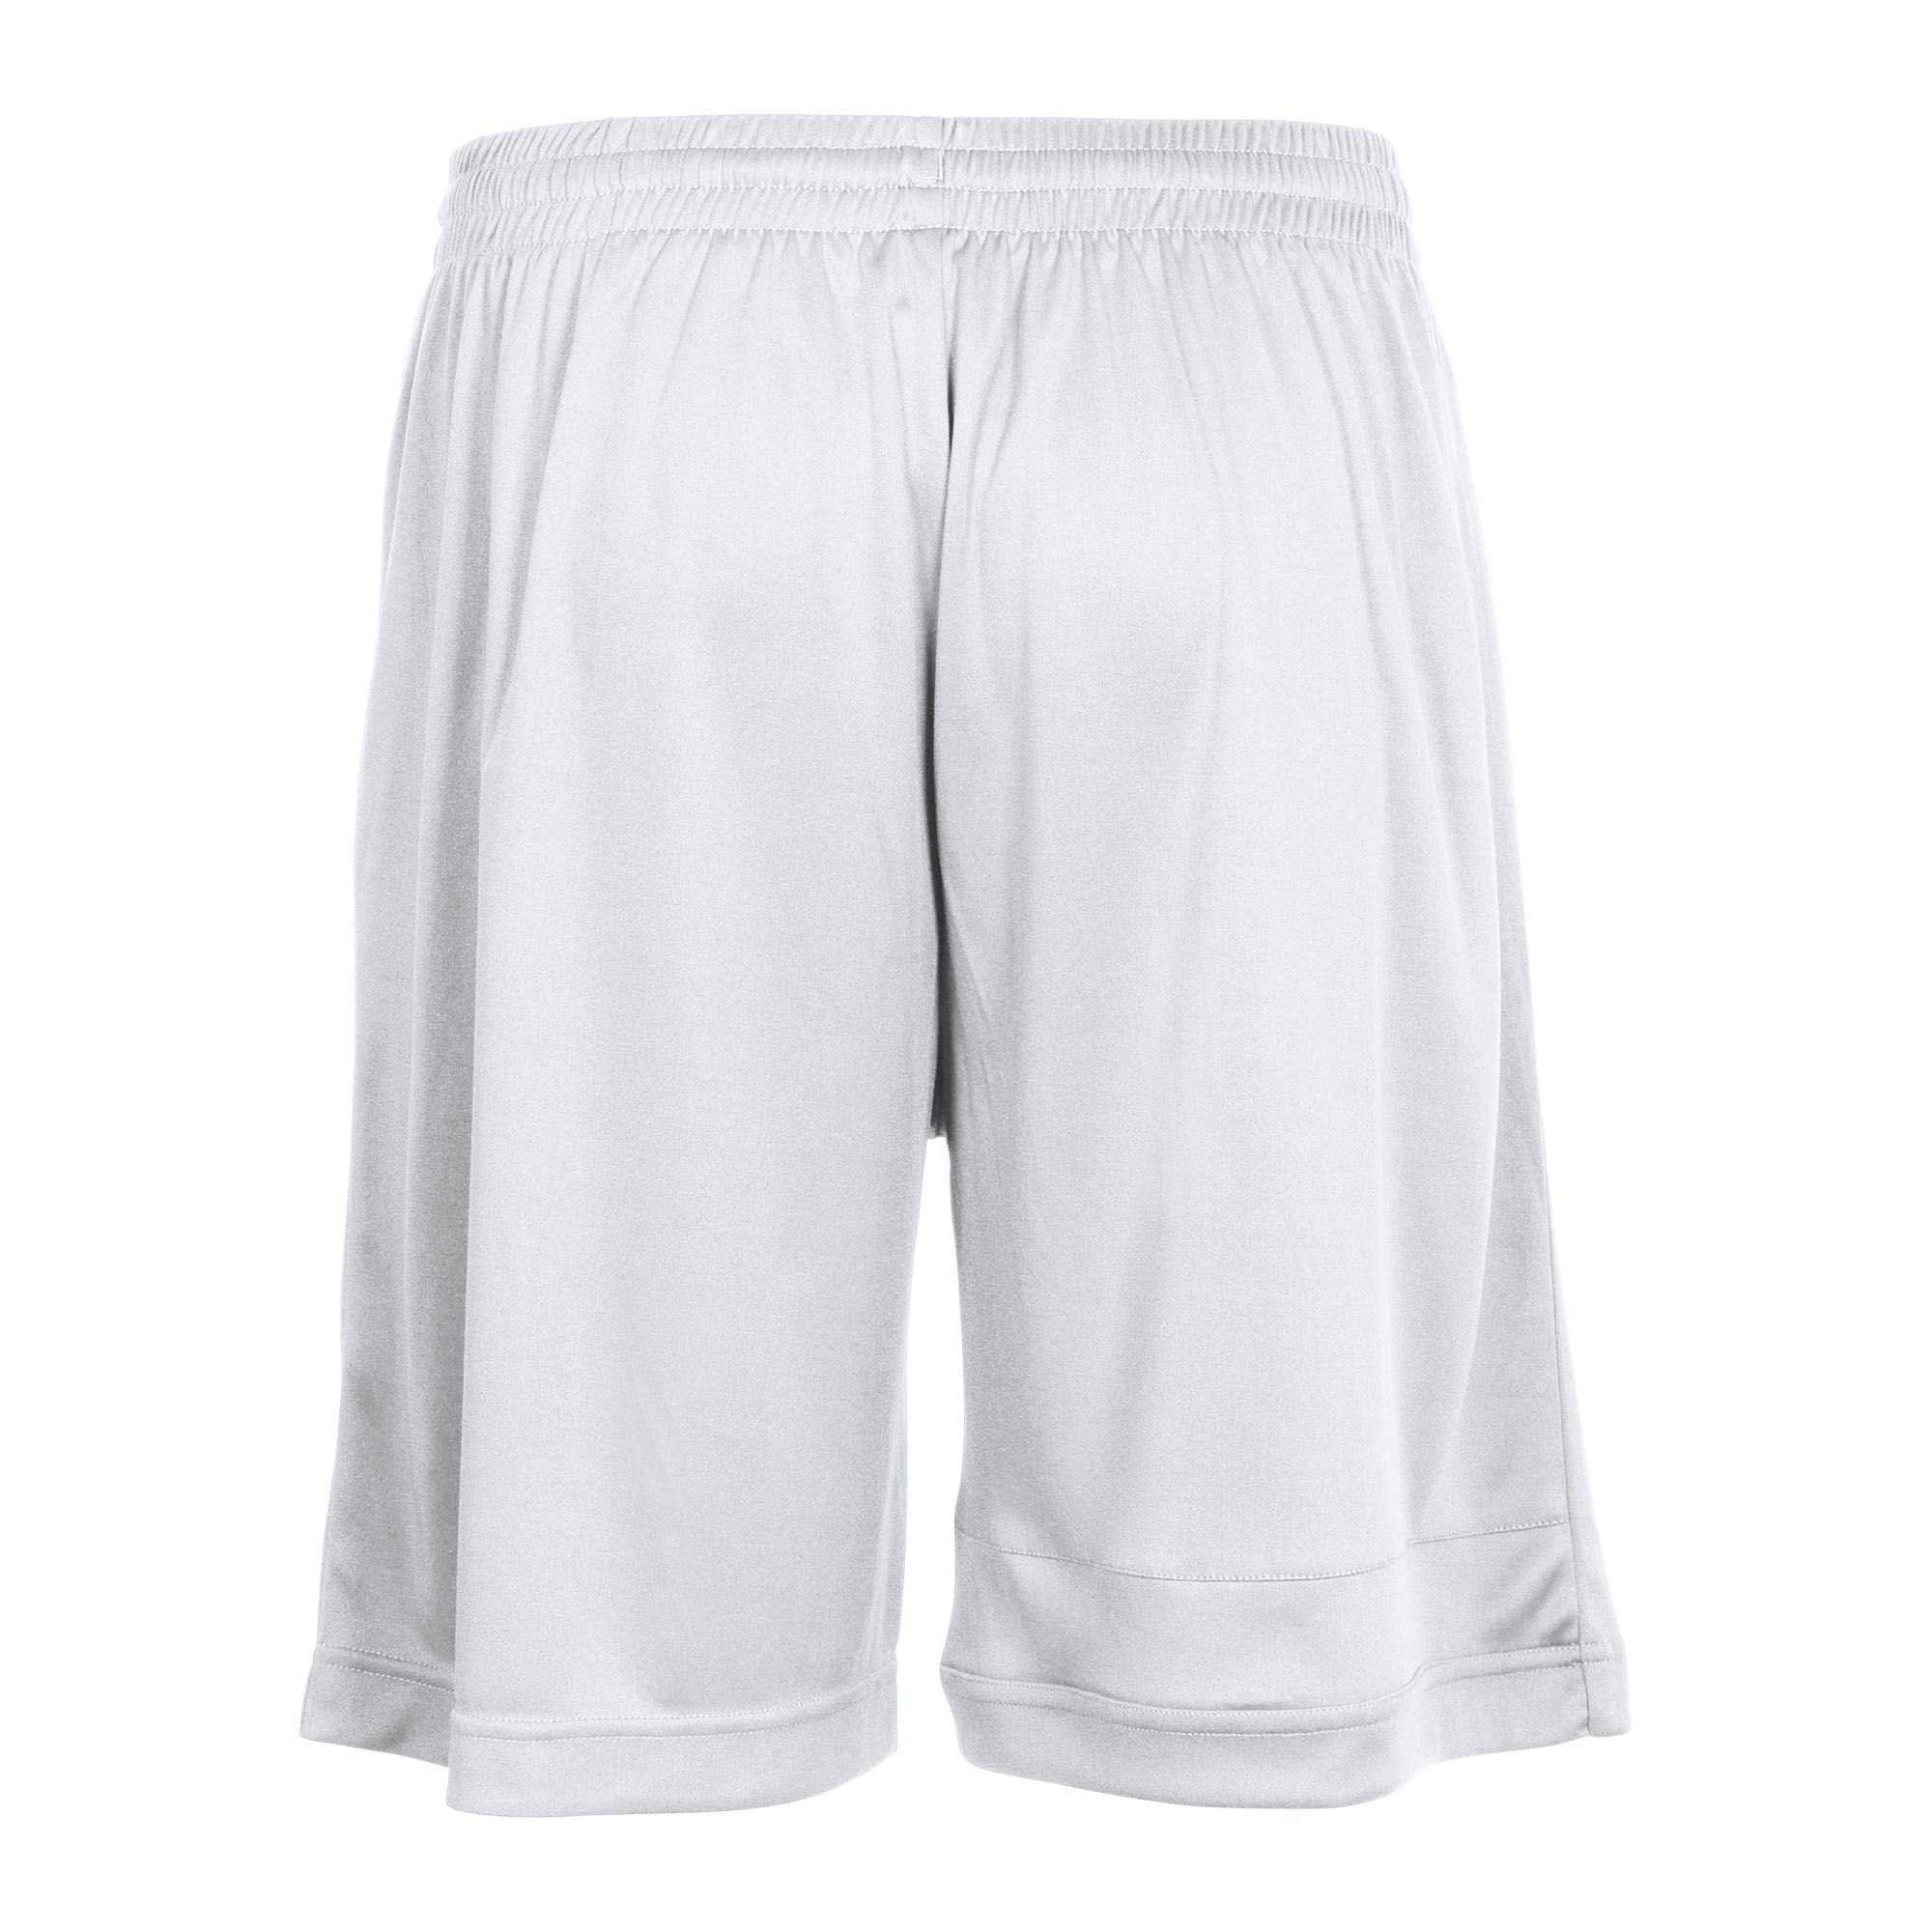 Stanno Field Shorts